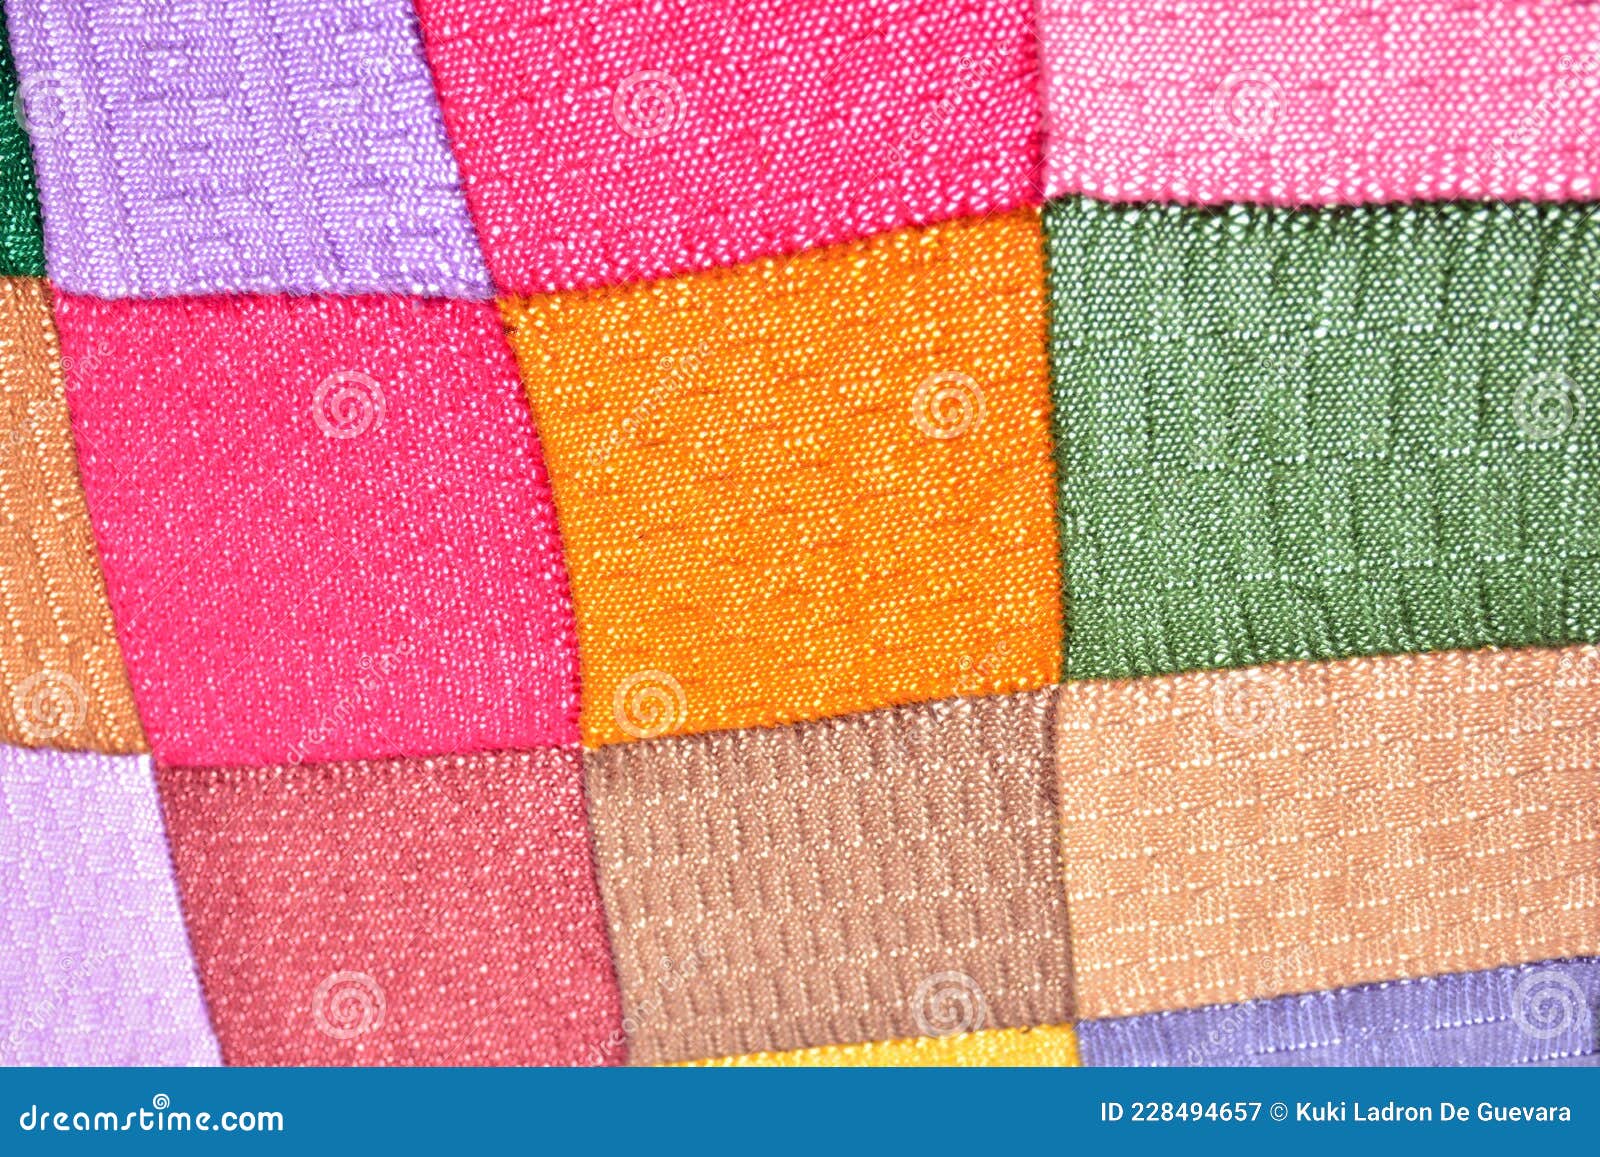 detail of handmade woolen jarapas